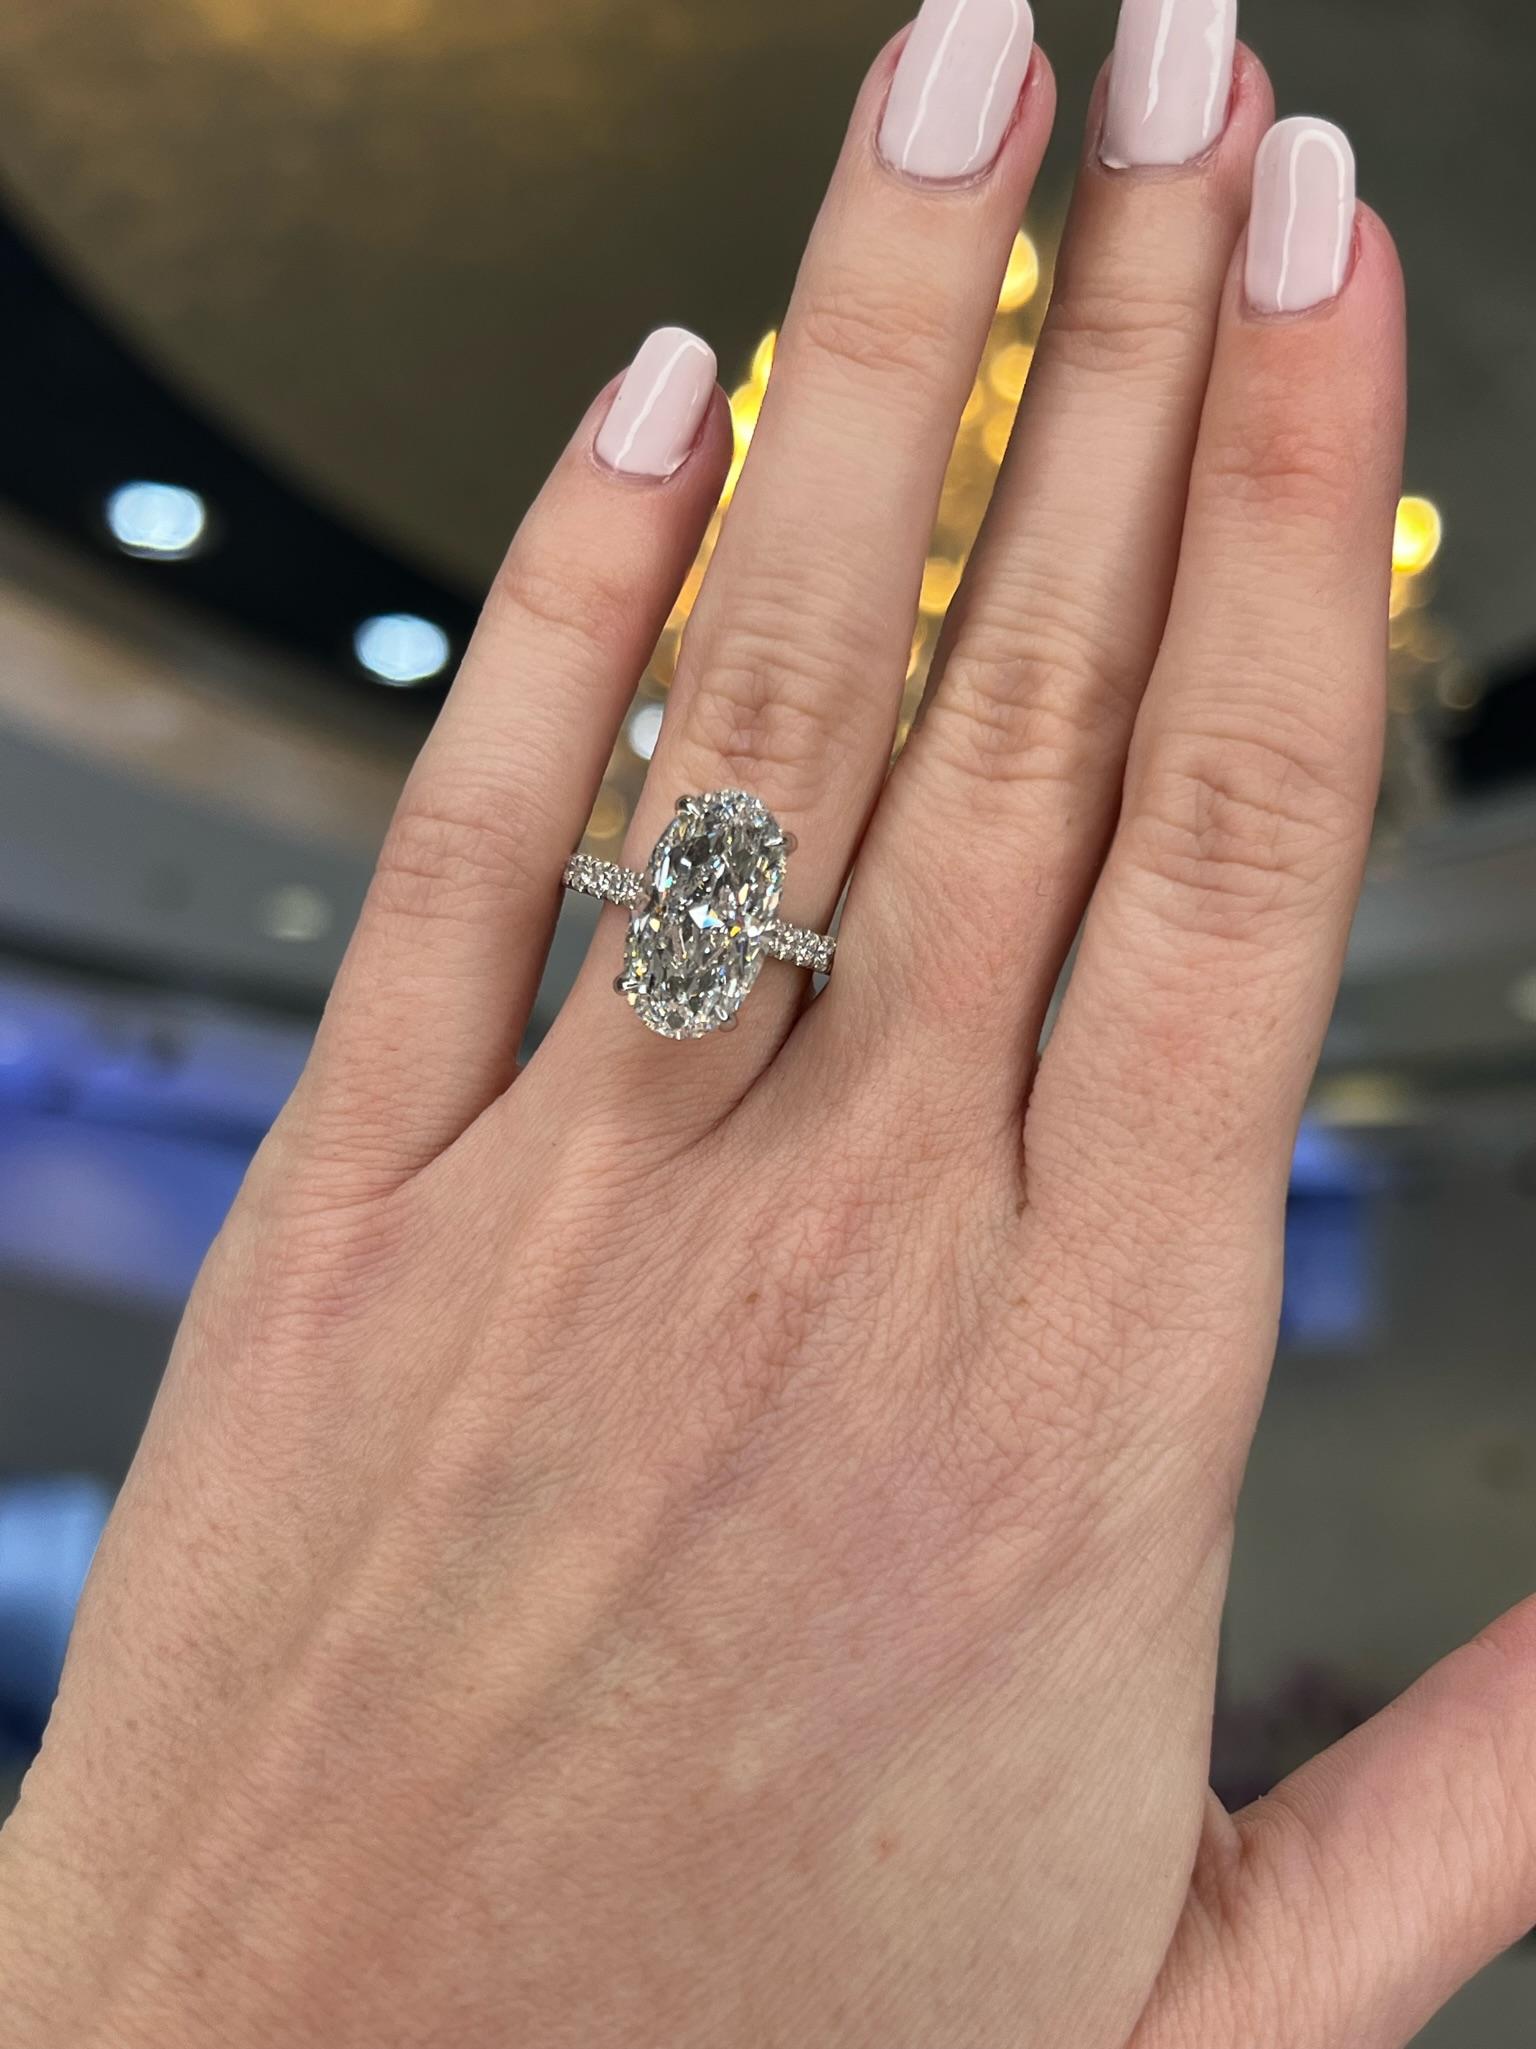 David Rosenberg 6.01 Carat Oval Shape D/SI2 GIA Diamond Engagement Wedding Ring For Sale 3